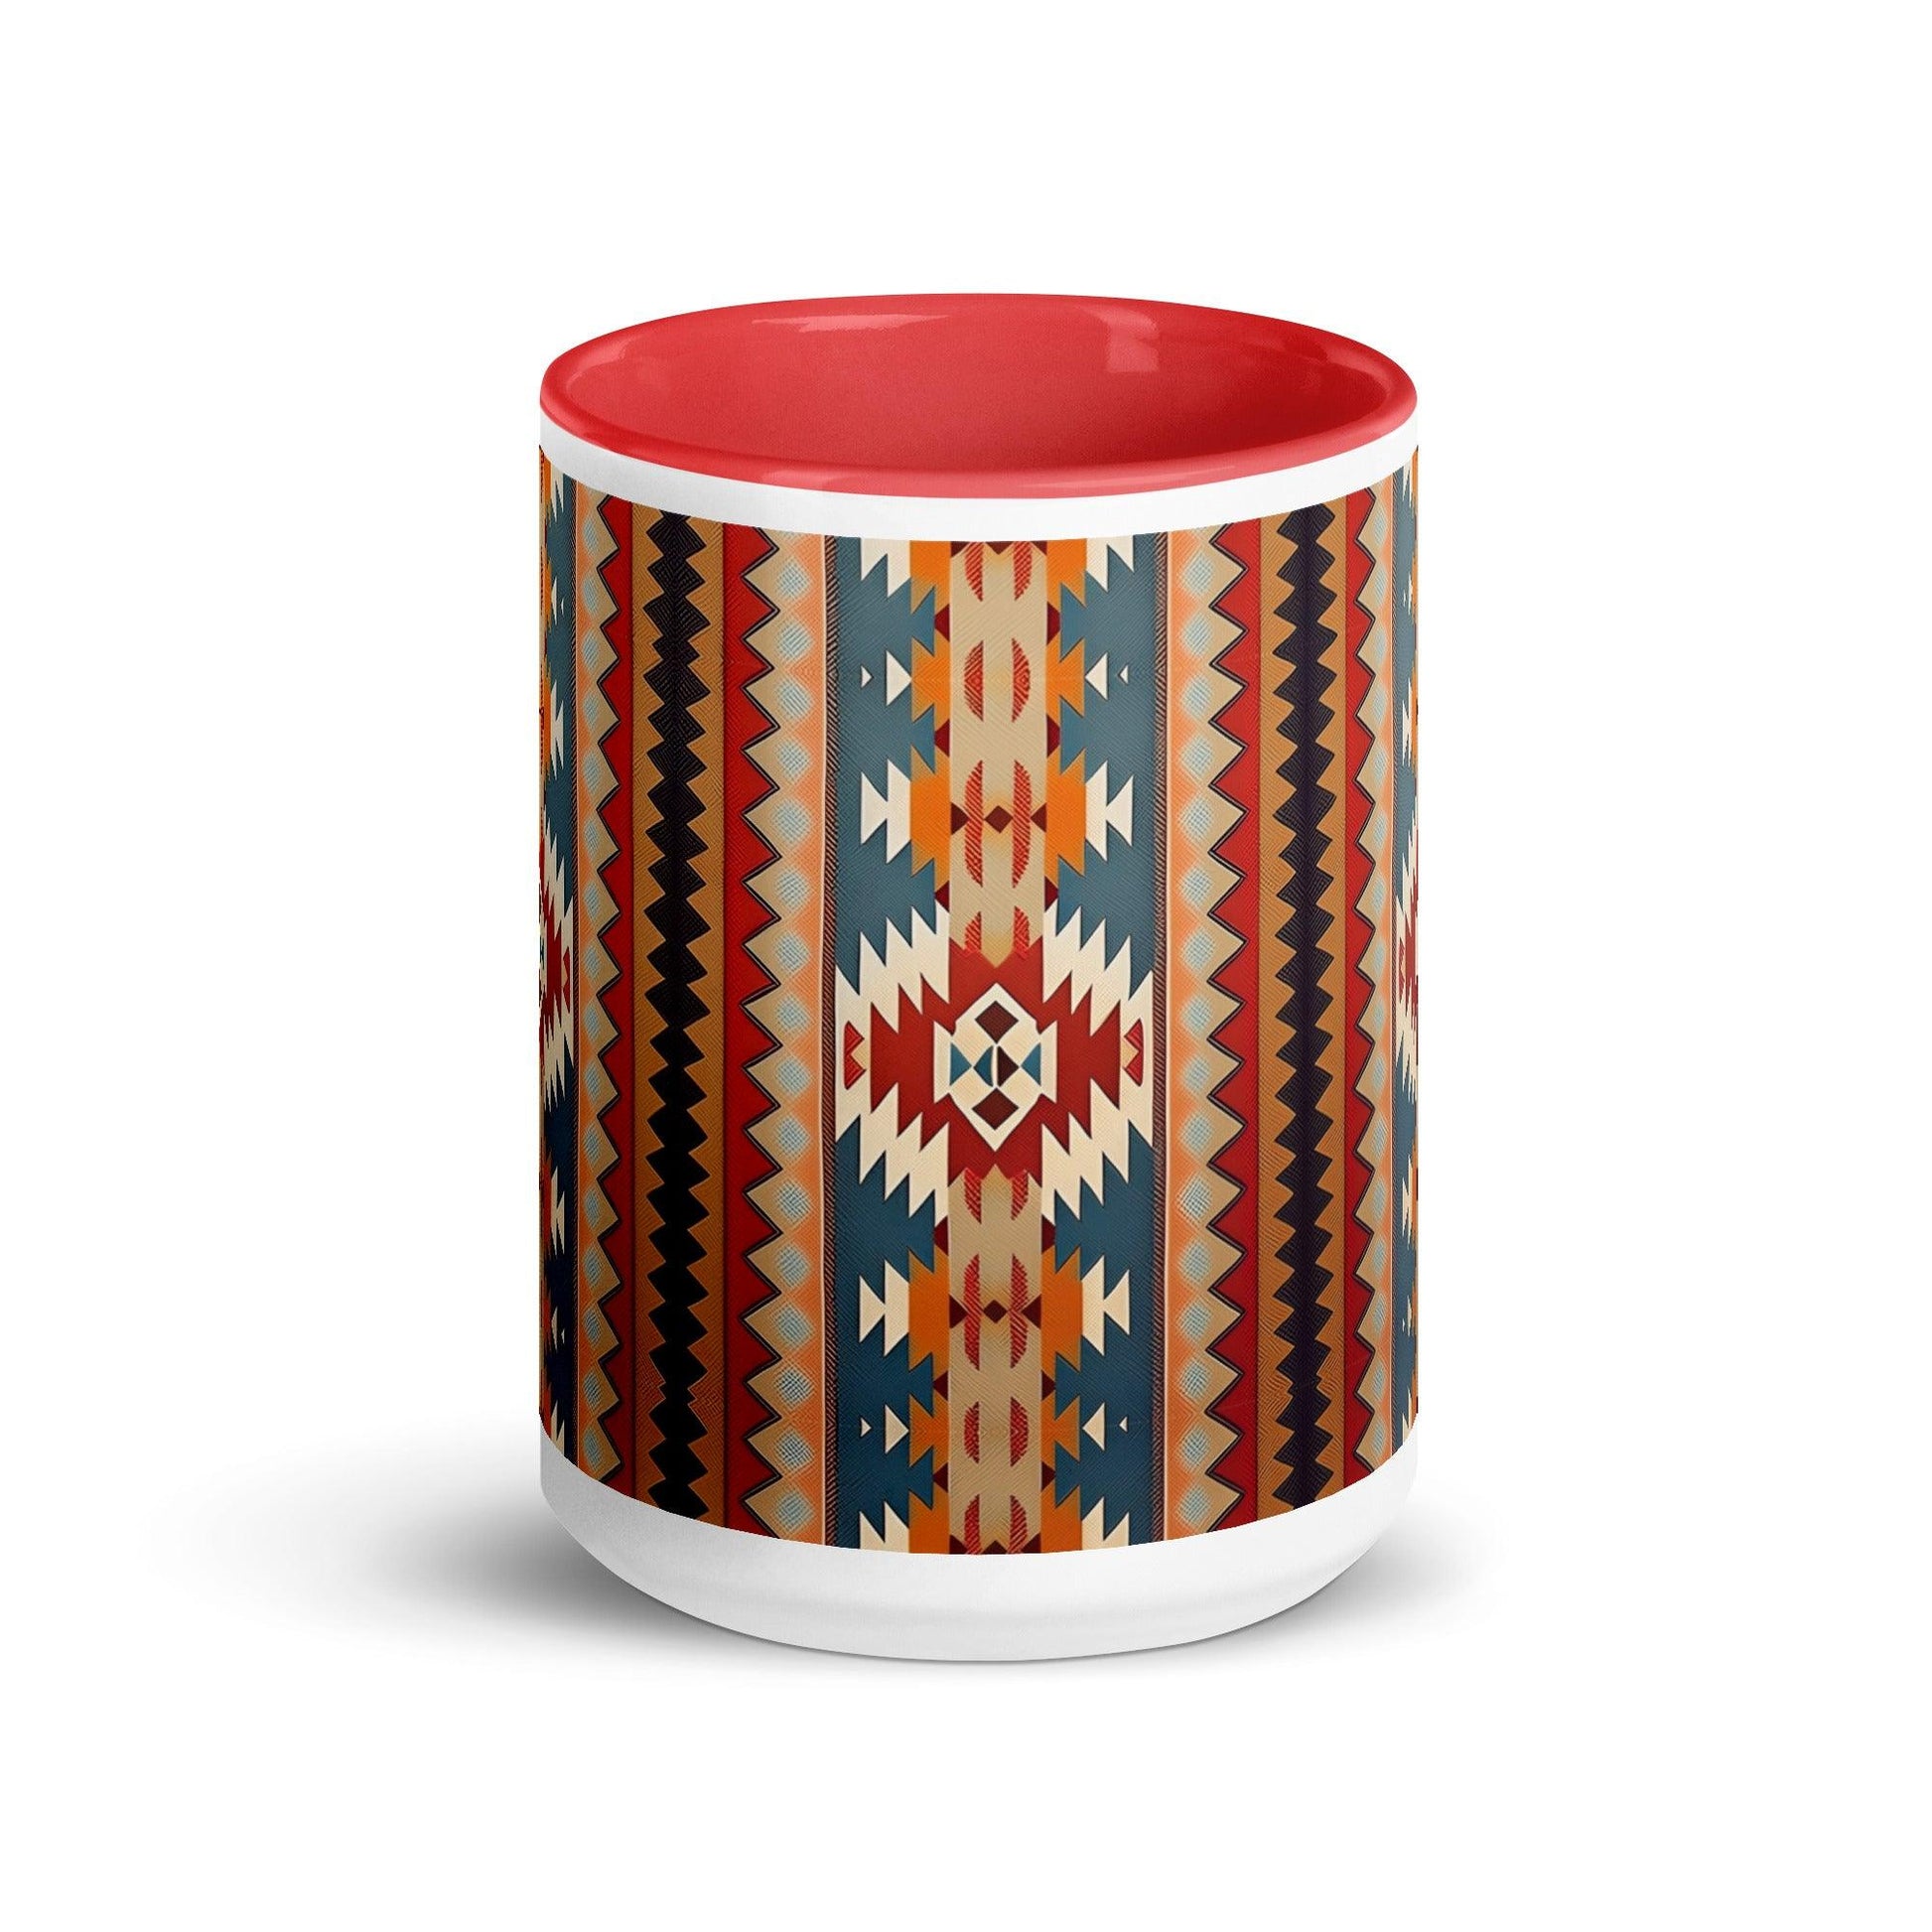 Native American Sunset Mug - The Global Wanderer